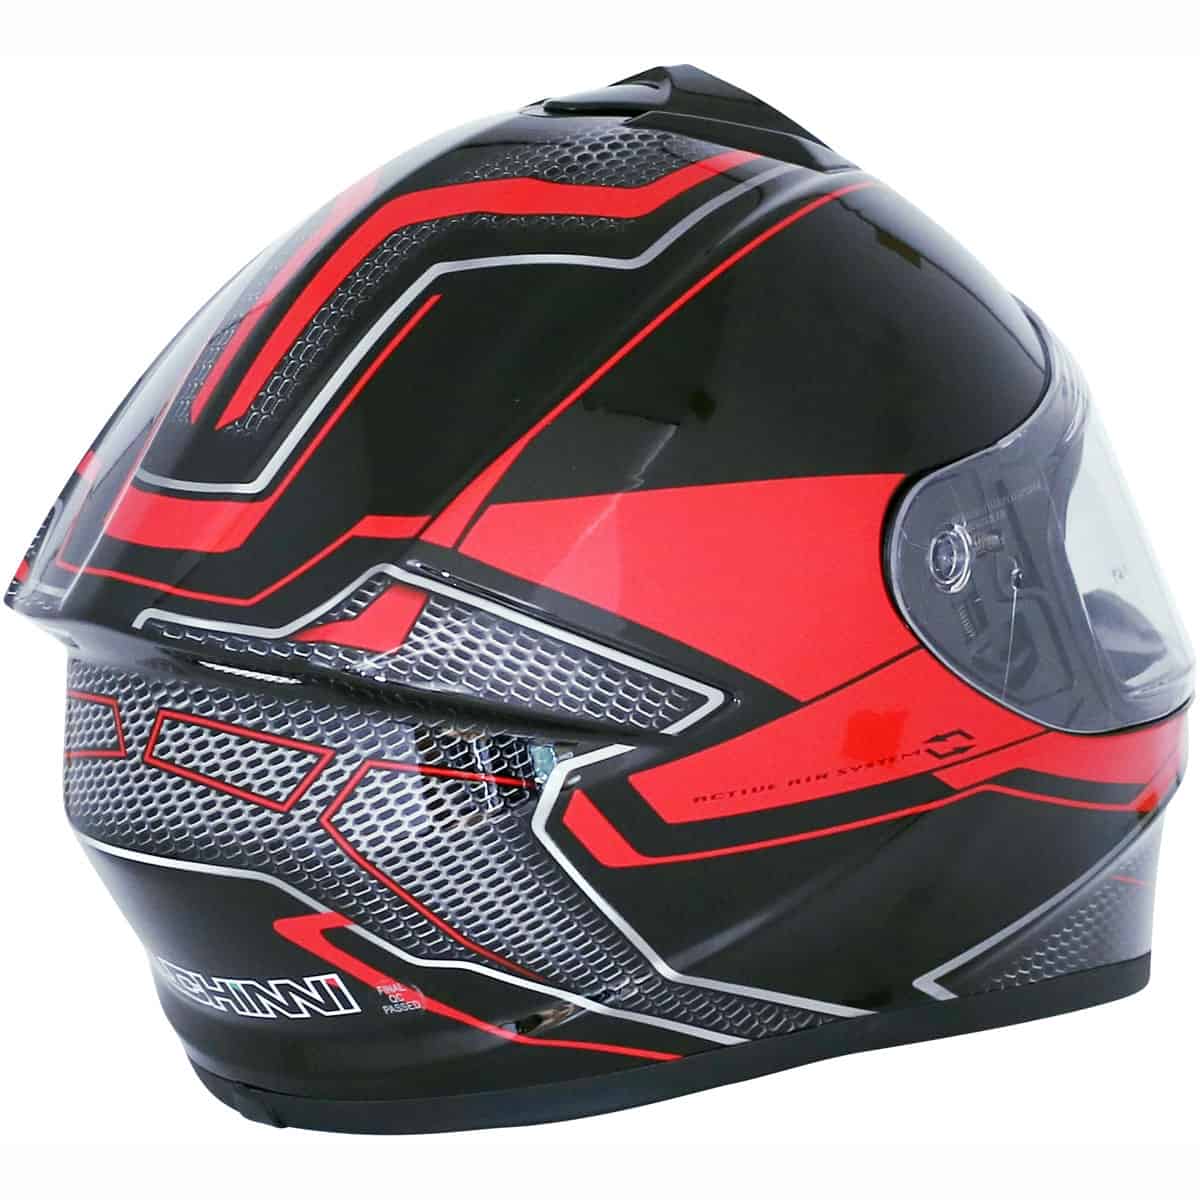 Duchinni D977 Full Face Motorcycle Helmet - Black Red 2